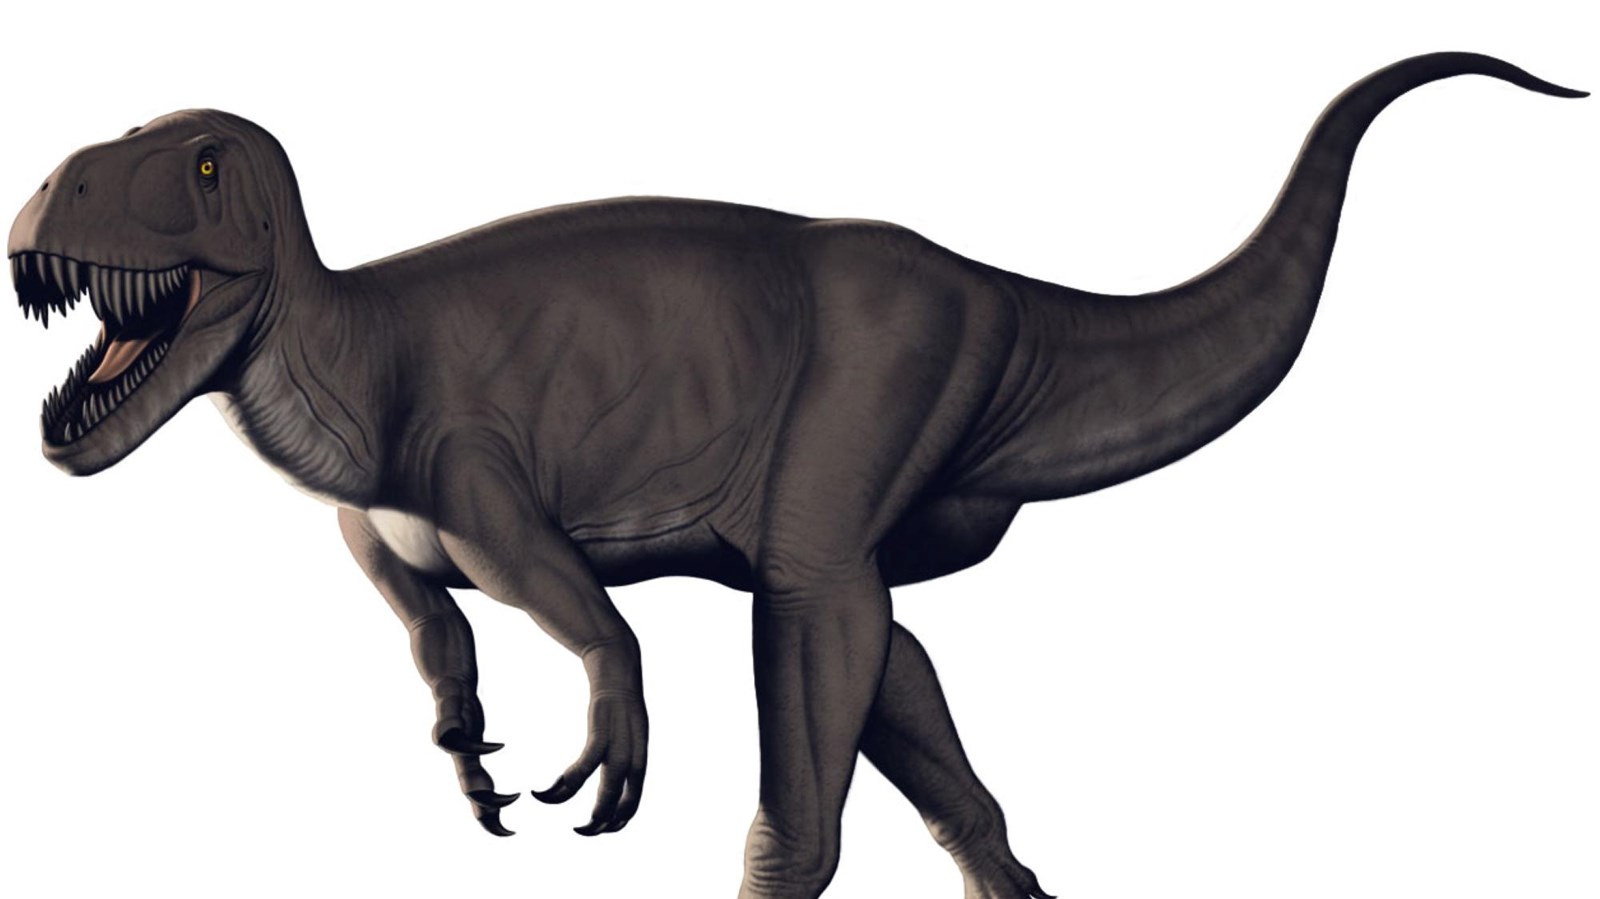 A large carnivorous dinosaur with sharp teeth.